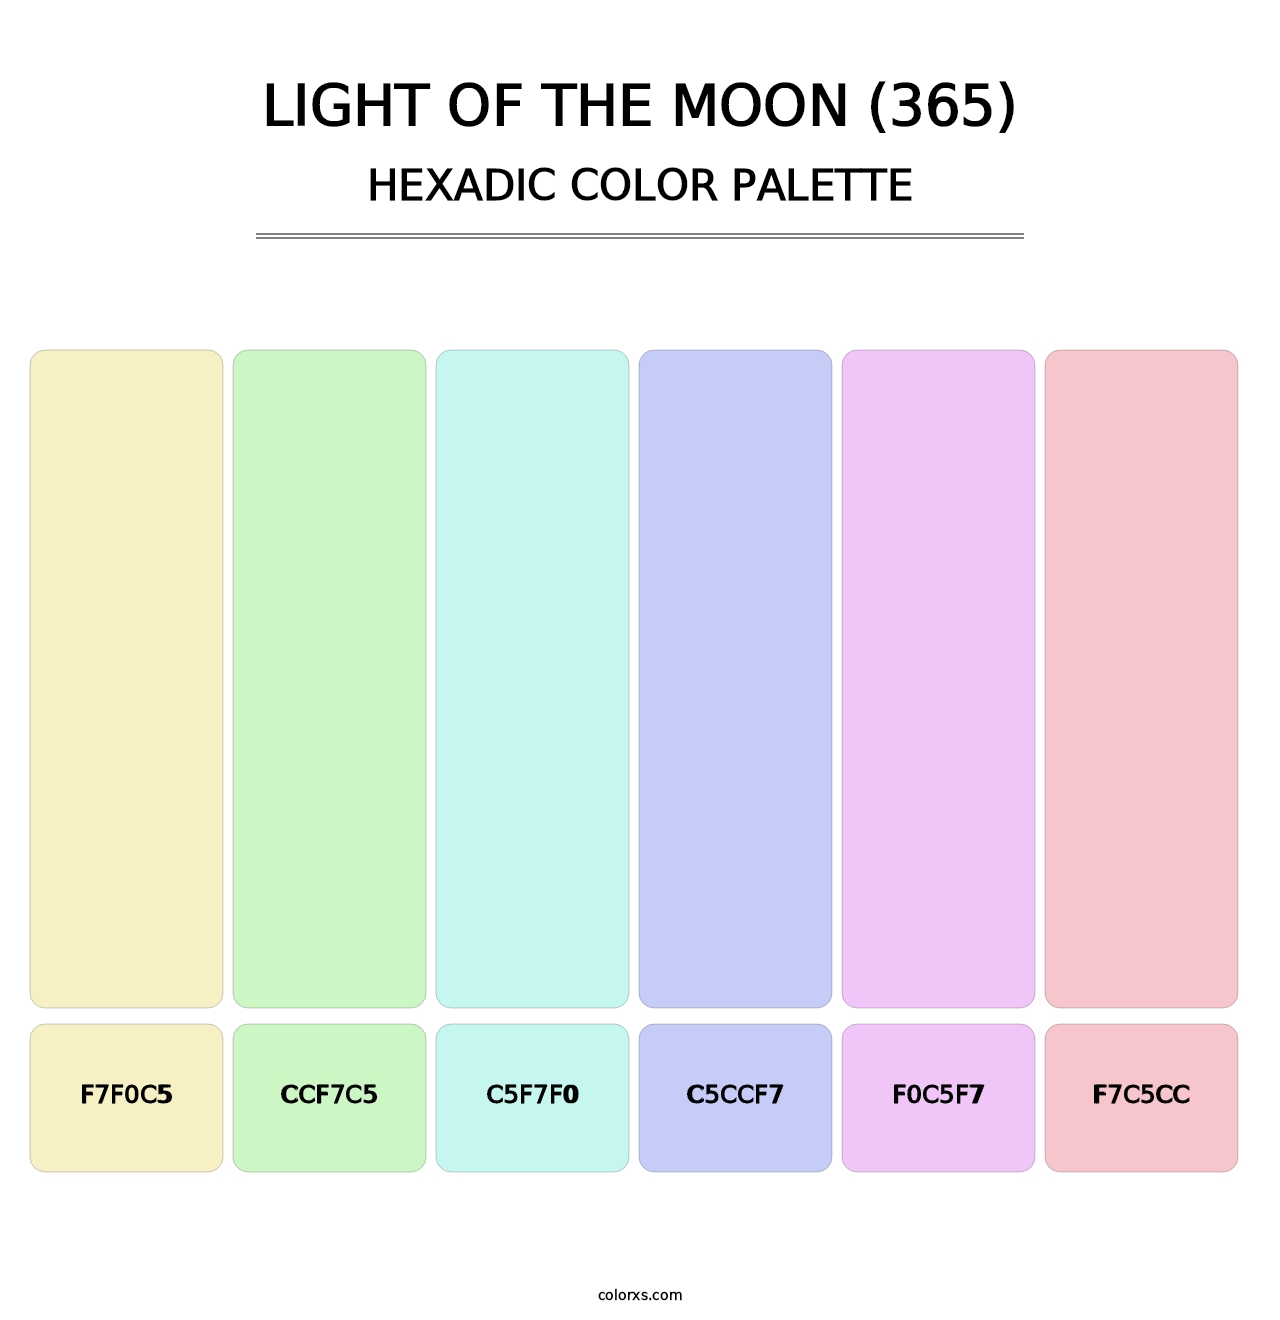 Light of the Moon (365) - Hexadic Color Palette